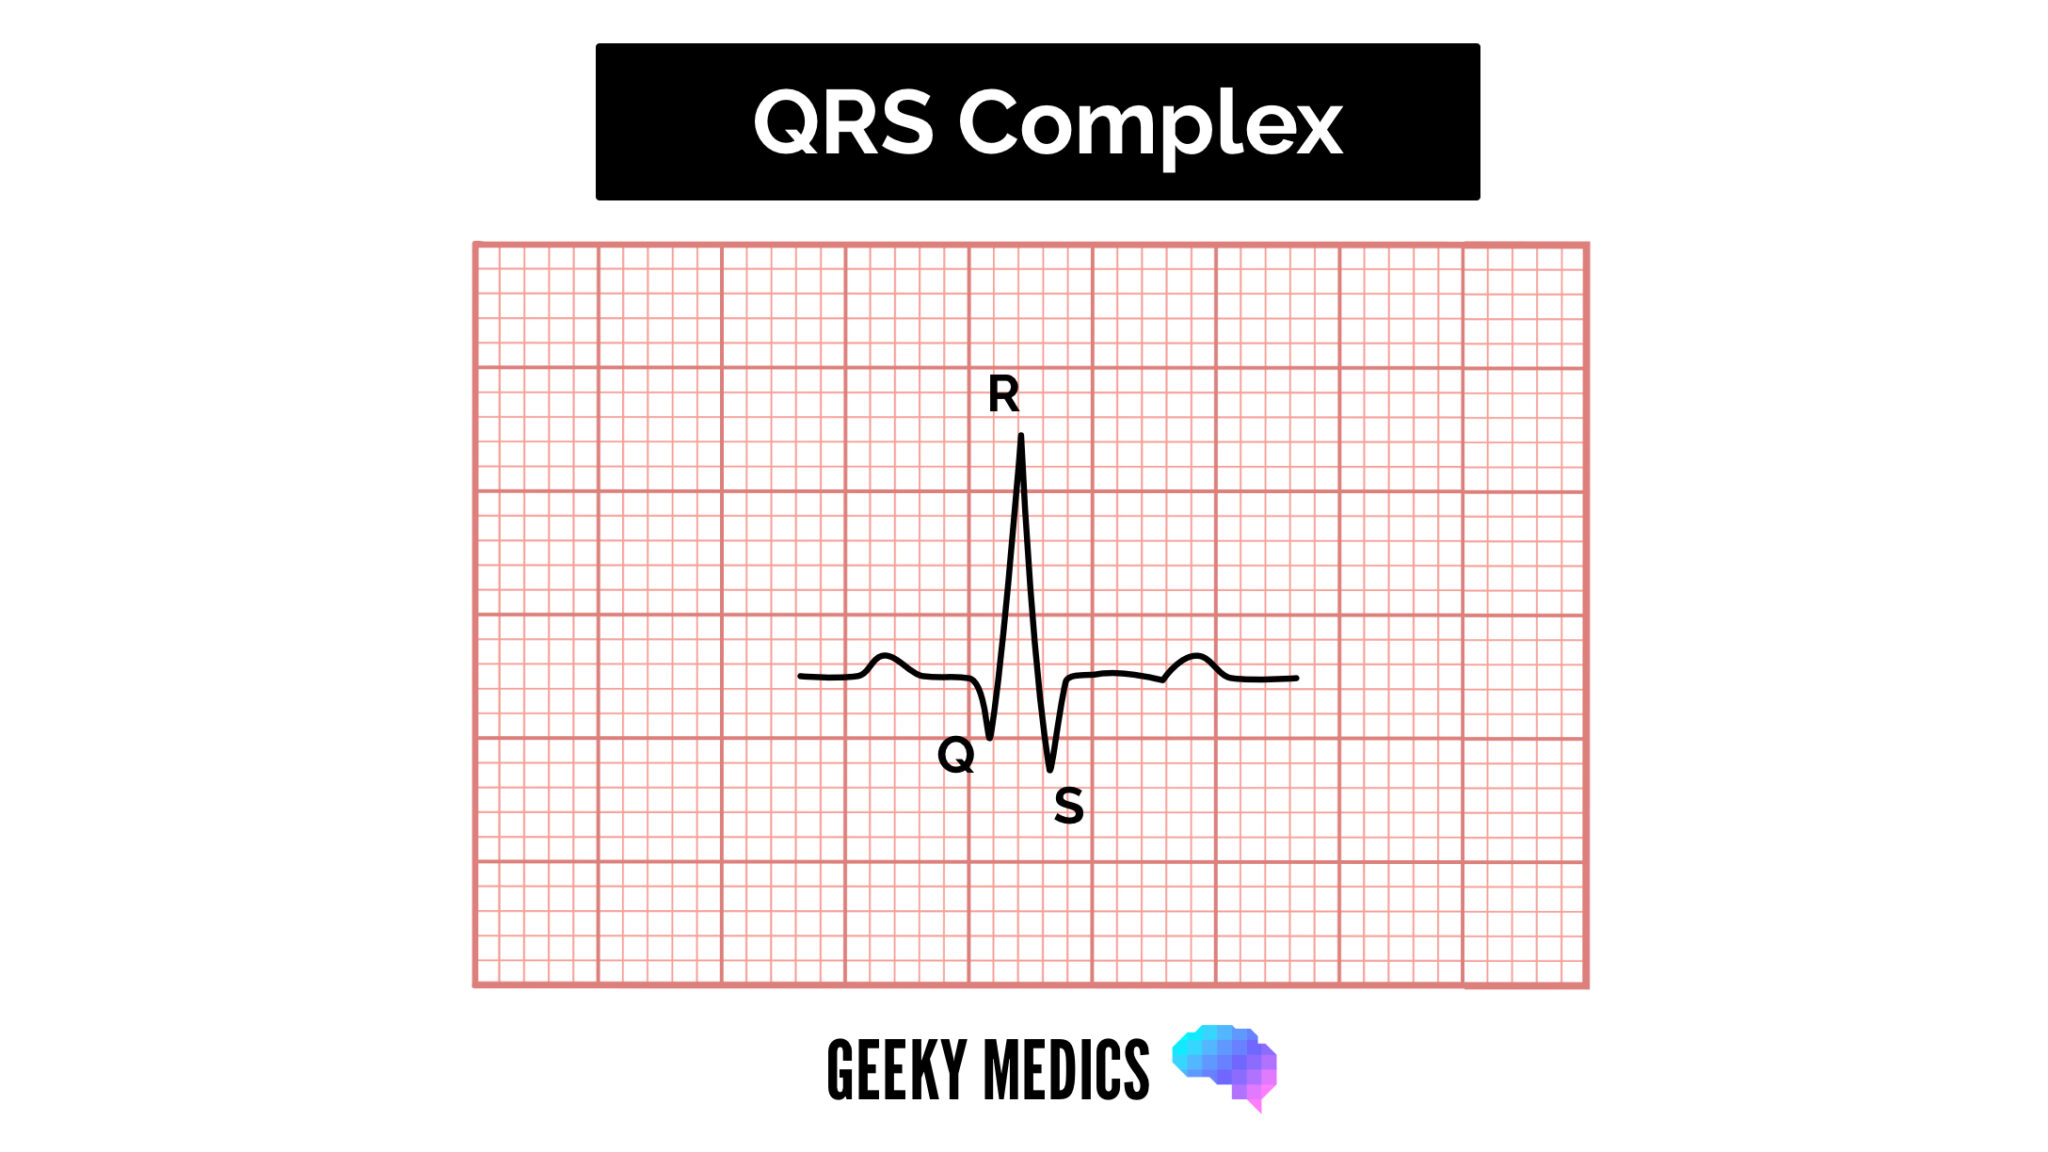 ECG - QRS Complex